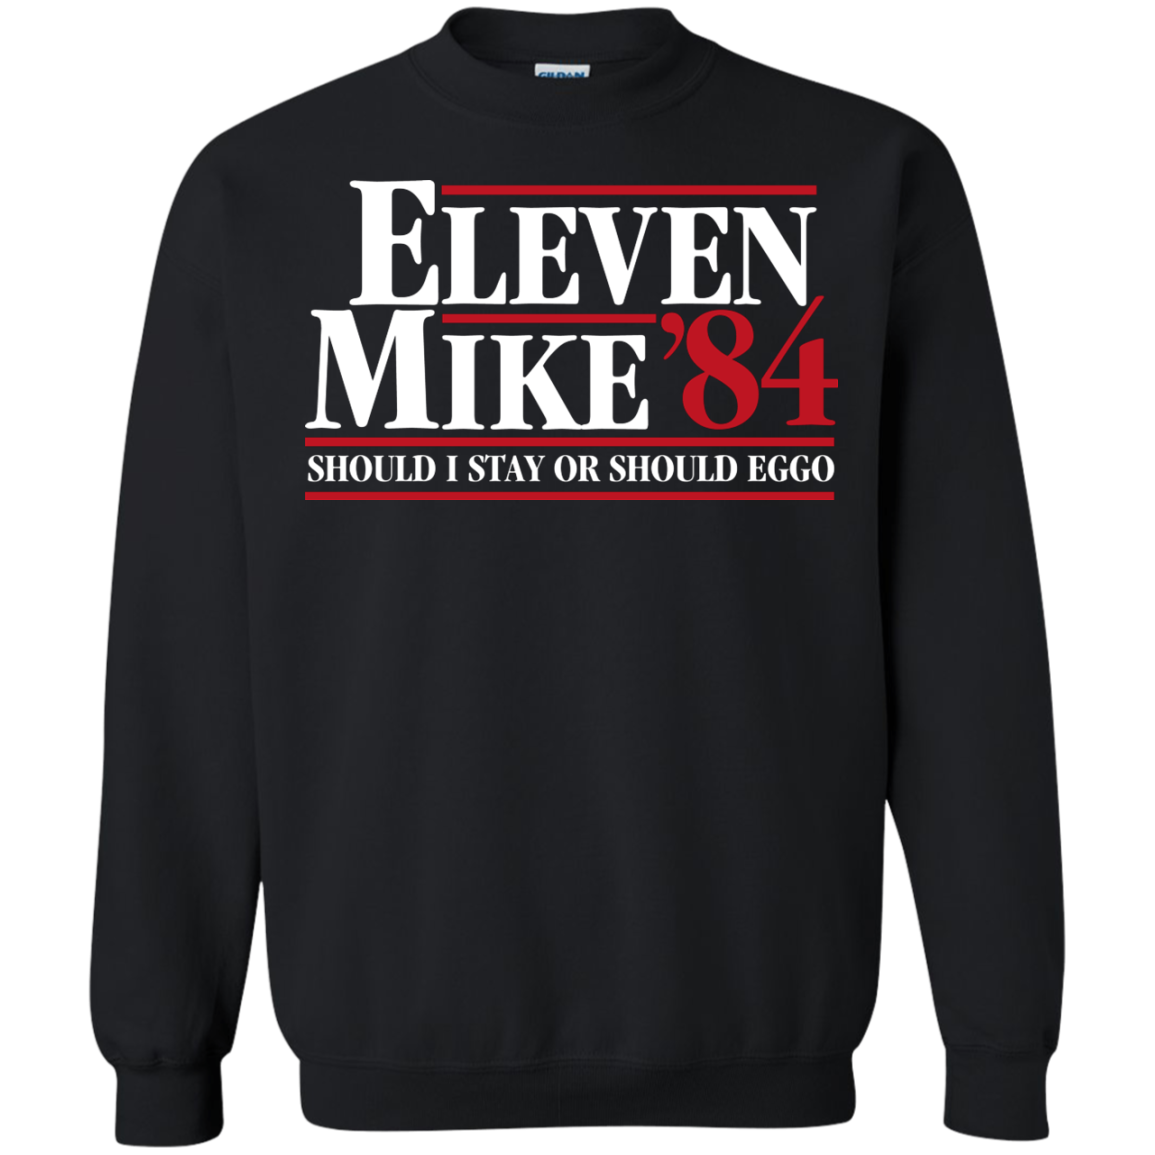 Eleven Mike 84 - Should I Stay or Should Eggo Crewneck Sweatshirt